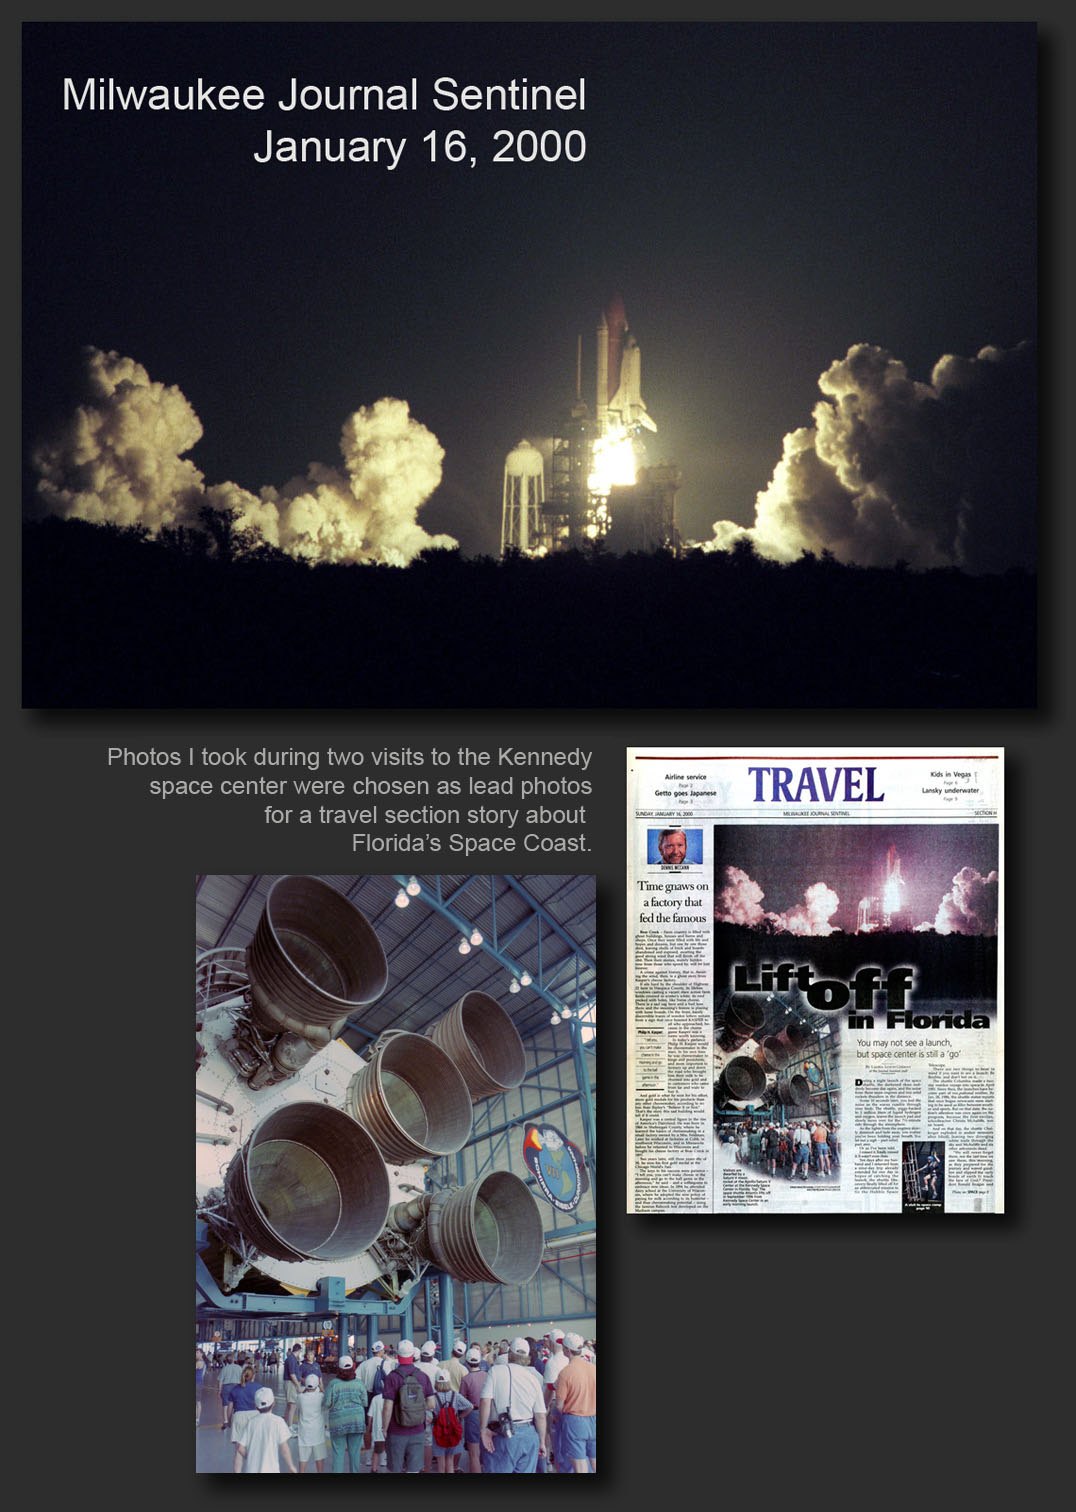 Night launch, space shuttle